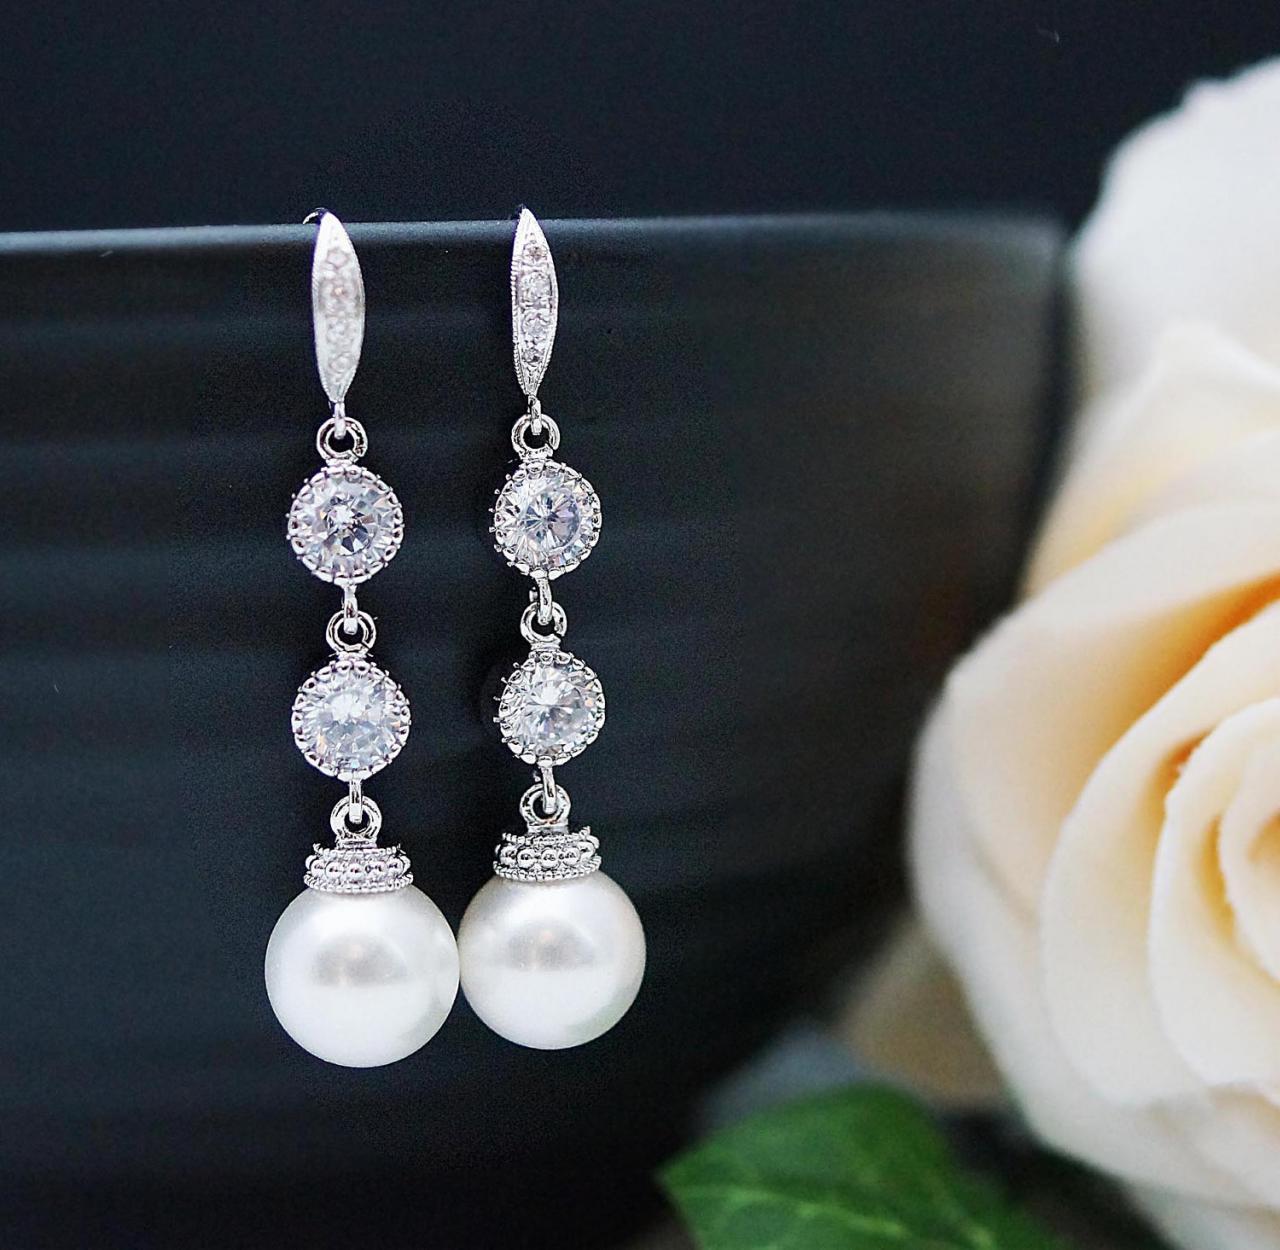 Wedding Dangle Earrings Bridal Jewelry Bridal Earrings Bridesmaid Earrings Crystal White Swarovski Pearls And Cubic Zirconia Connectors